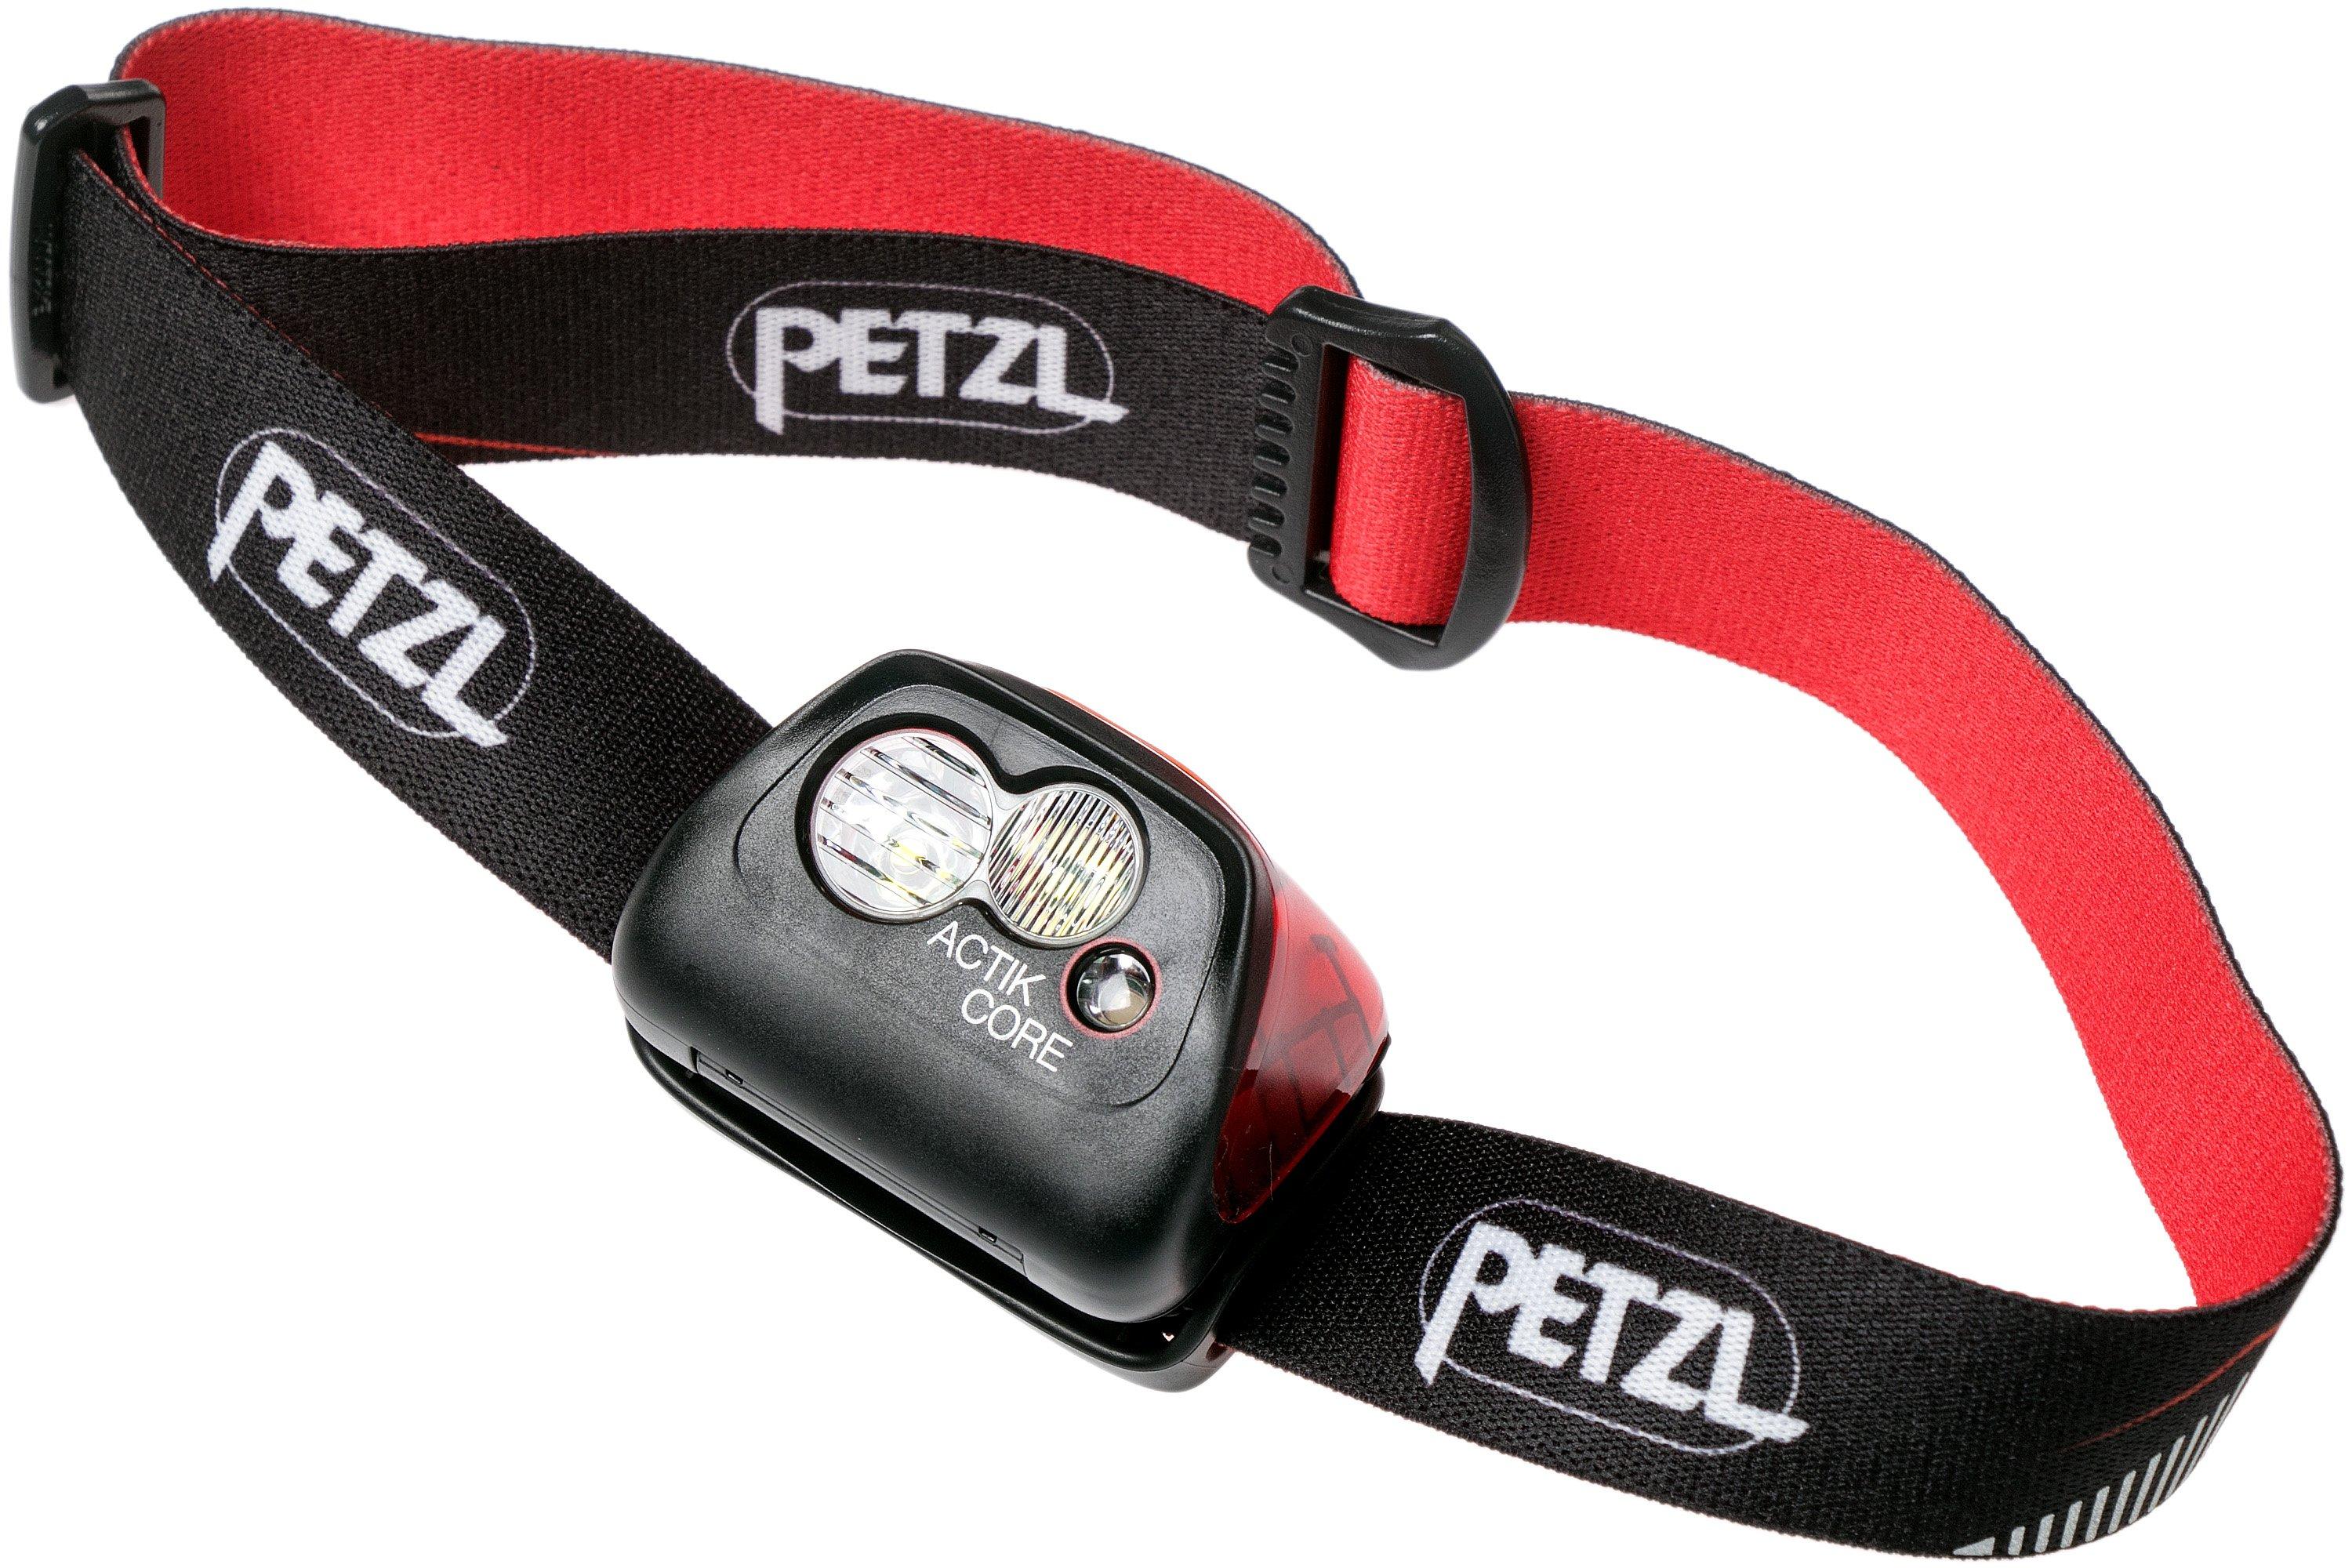 Petzl Actik Core E099GA01 head torch, red  Advantageously shopping at